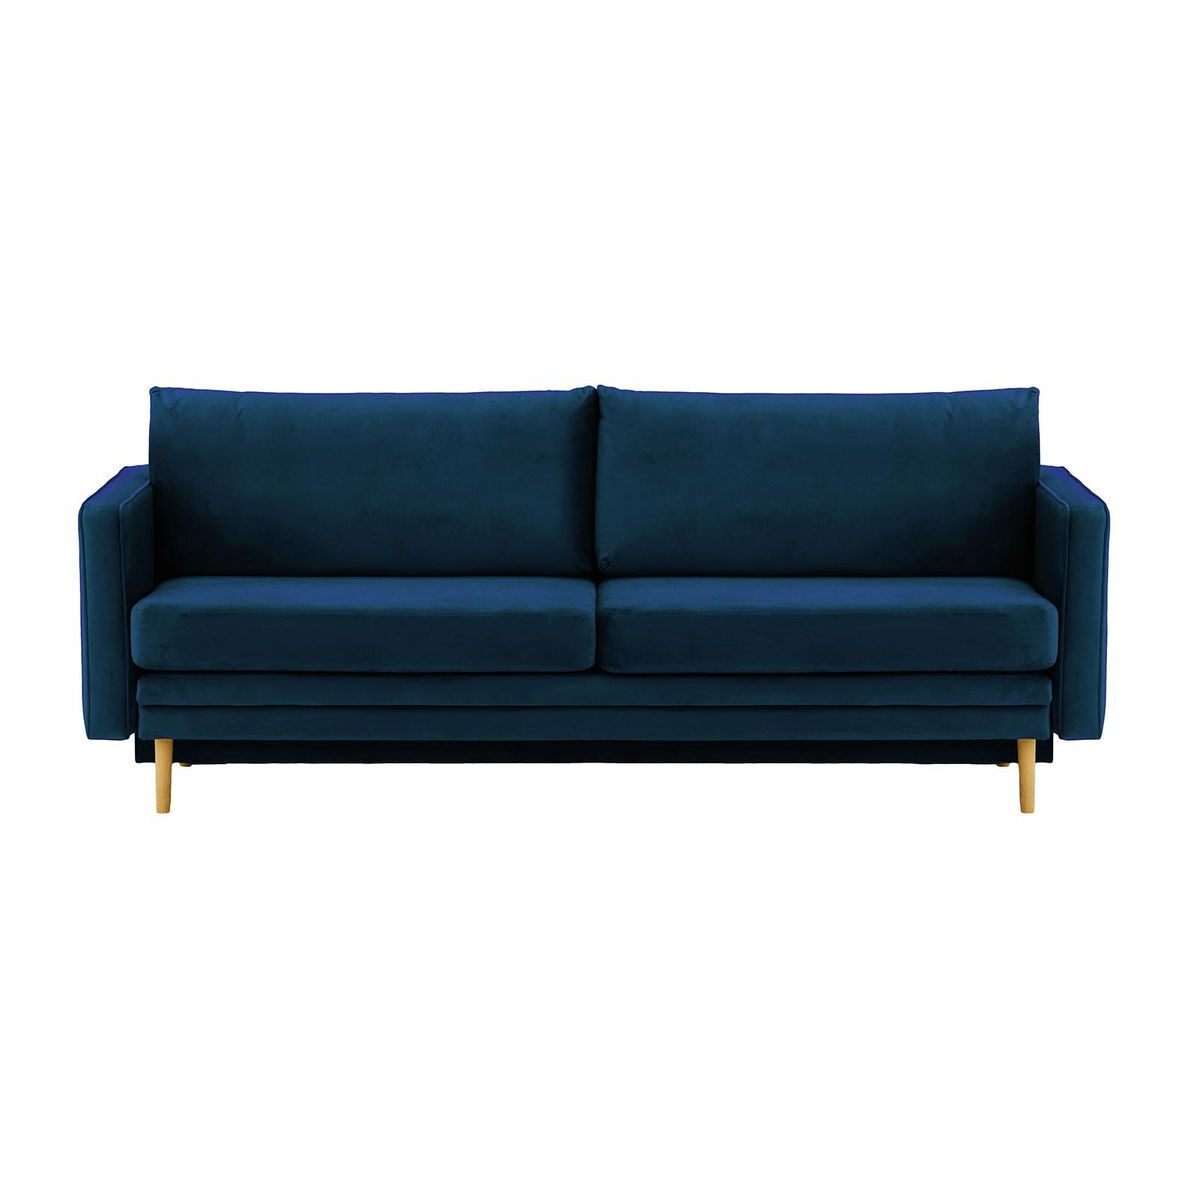 Lioni Sofa Bed with Storage, navy blue, Leg colour: aveo - image 1